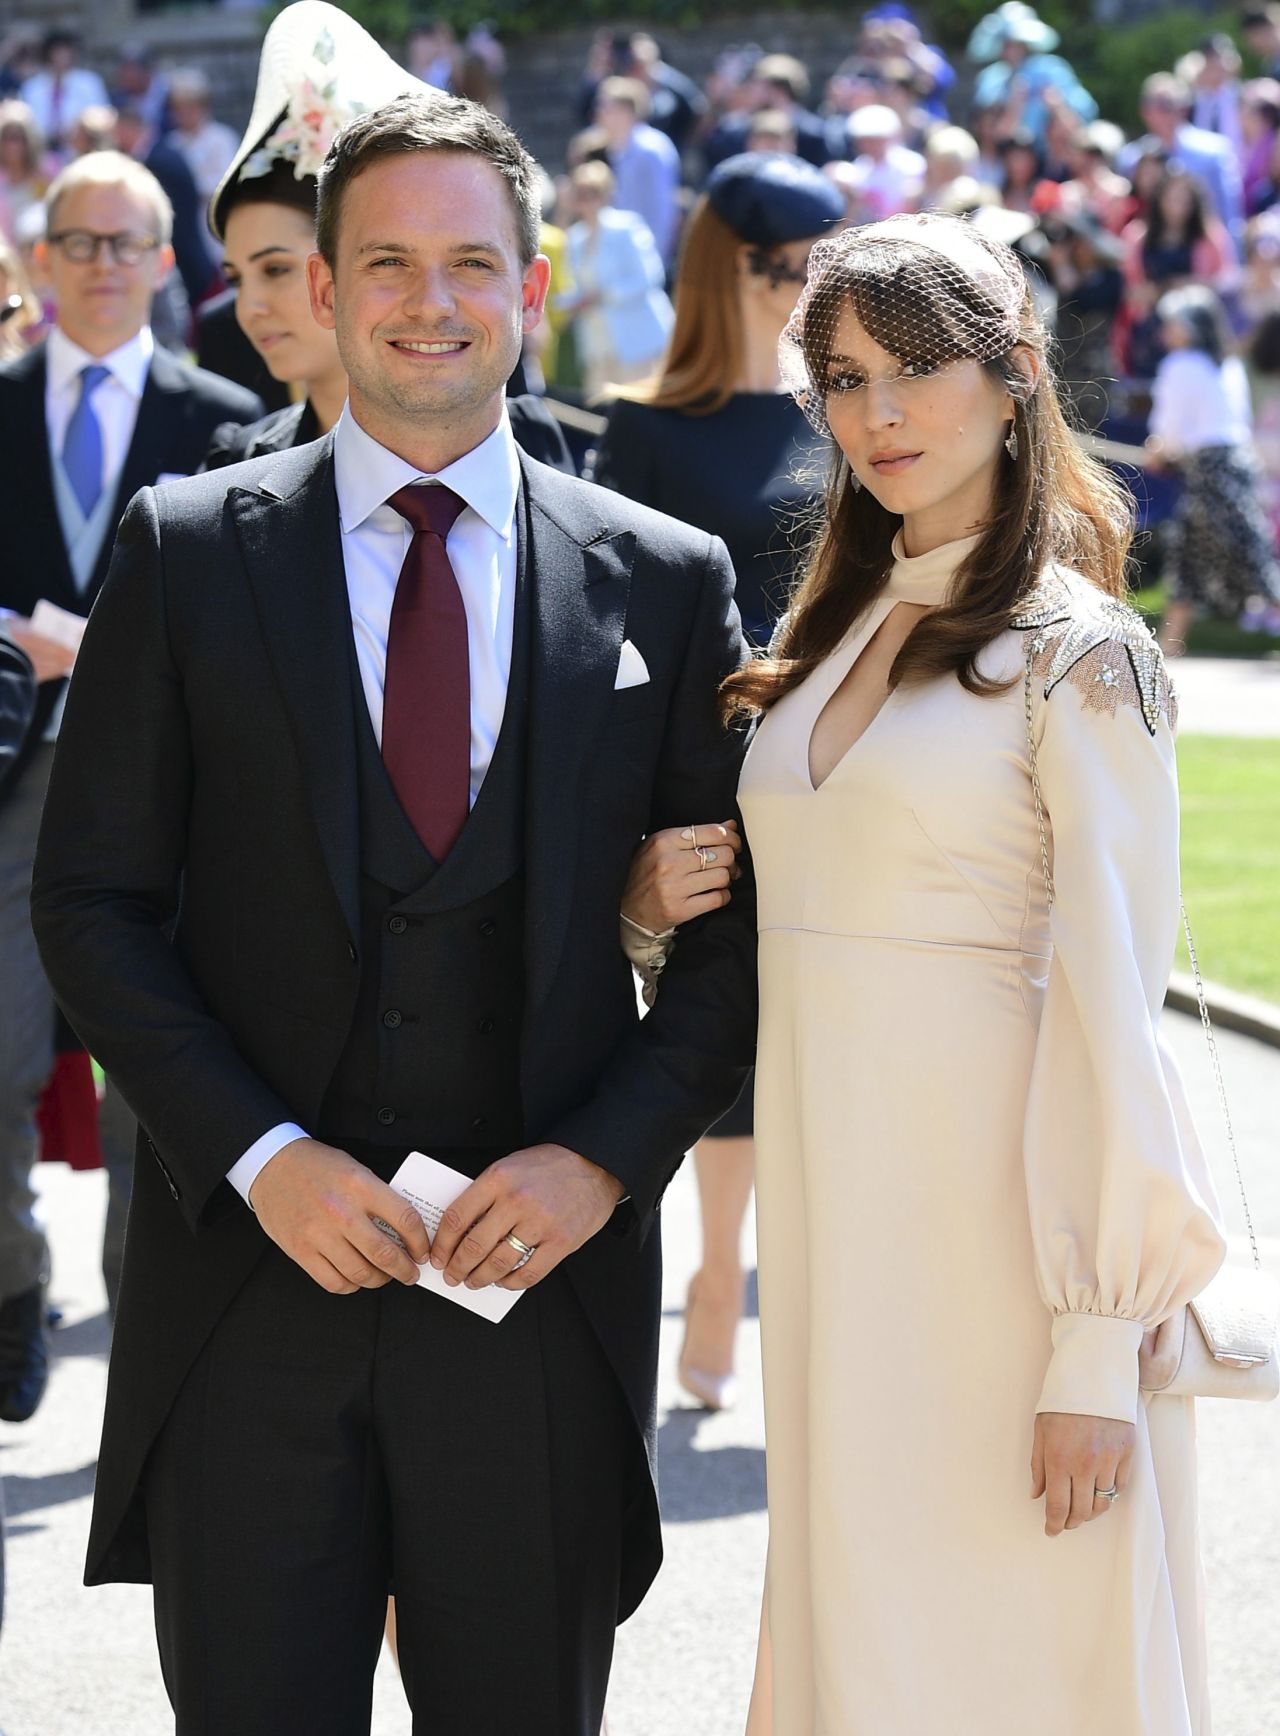 Patrick J. Adams and wife Troian Bellisario at the royal wedding in May 2018. 